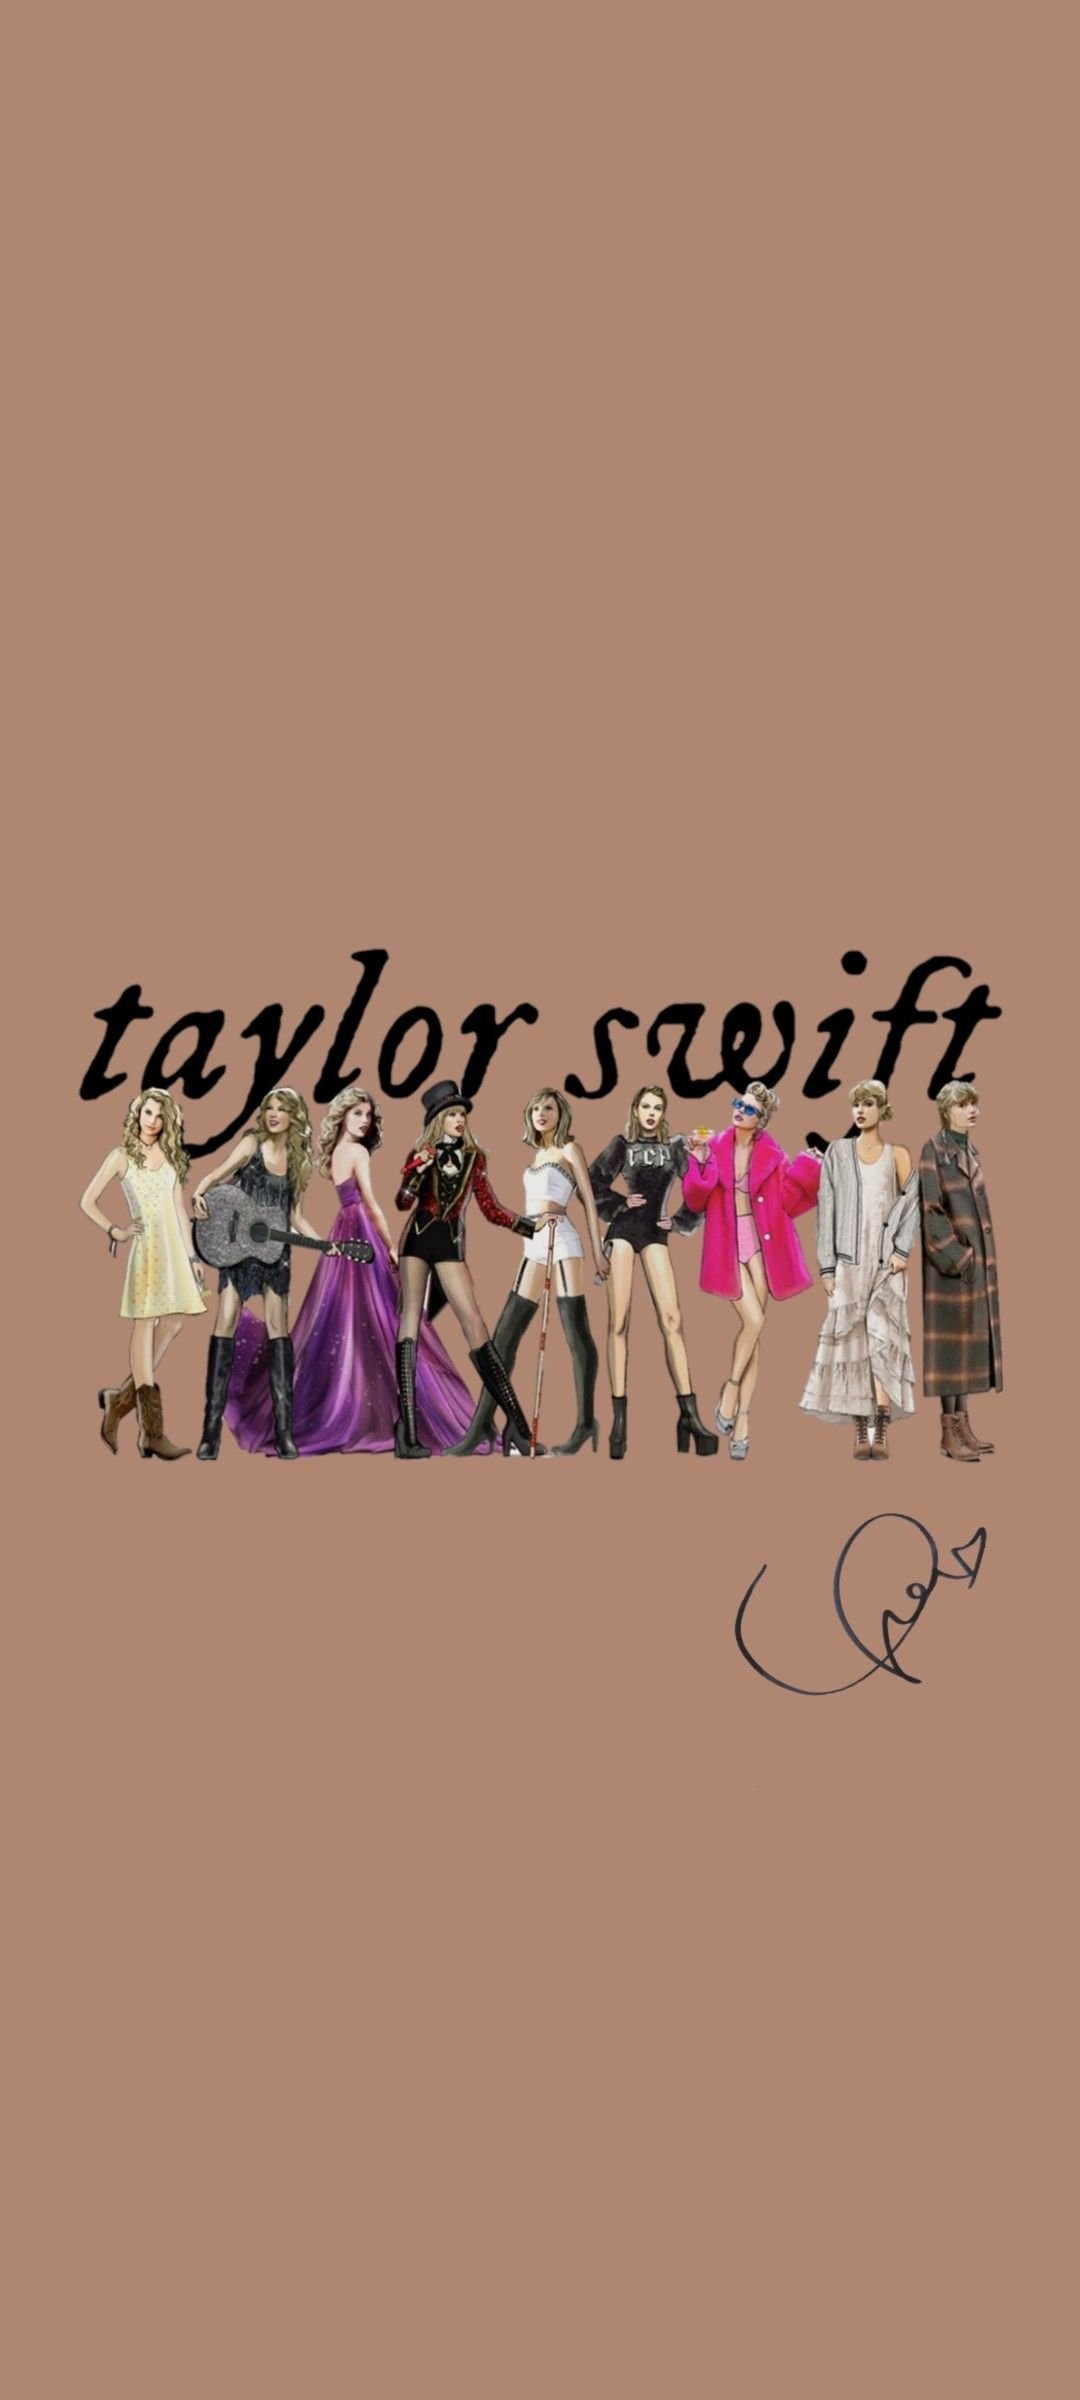 Taylor Swift eras lockscreen. Taylor swift songs, Taylor swift party, Taylor swift wallpaper